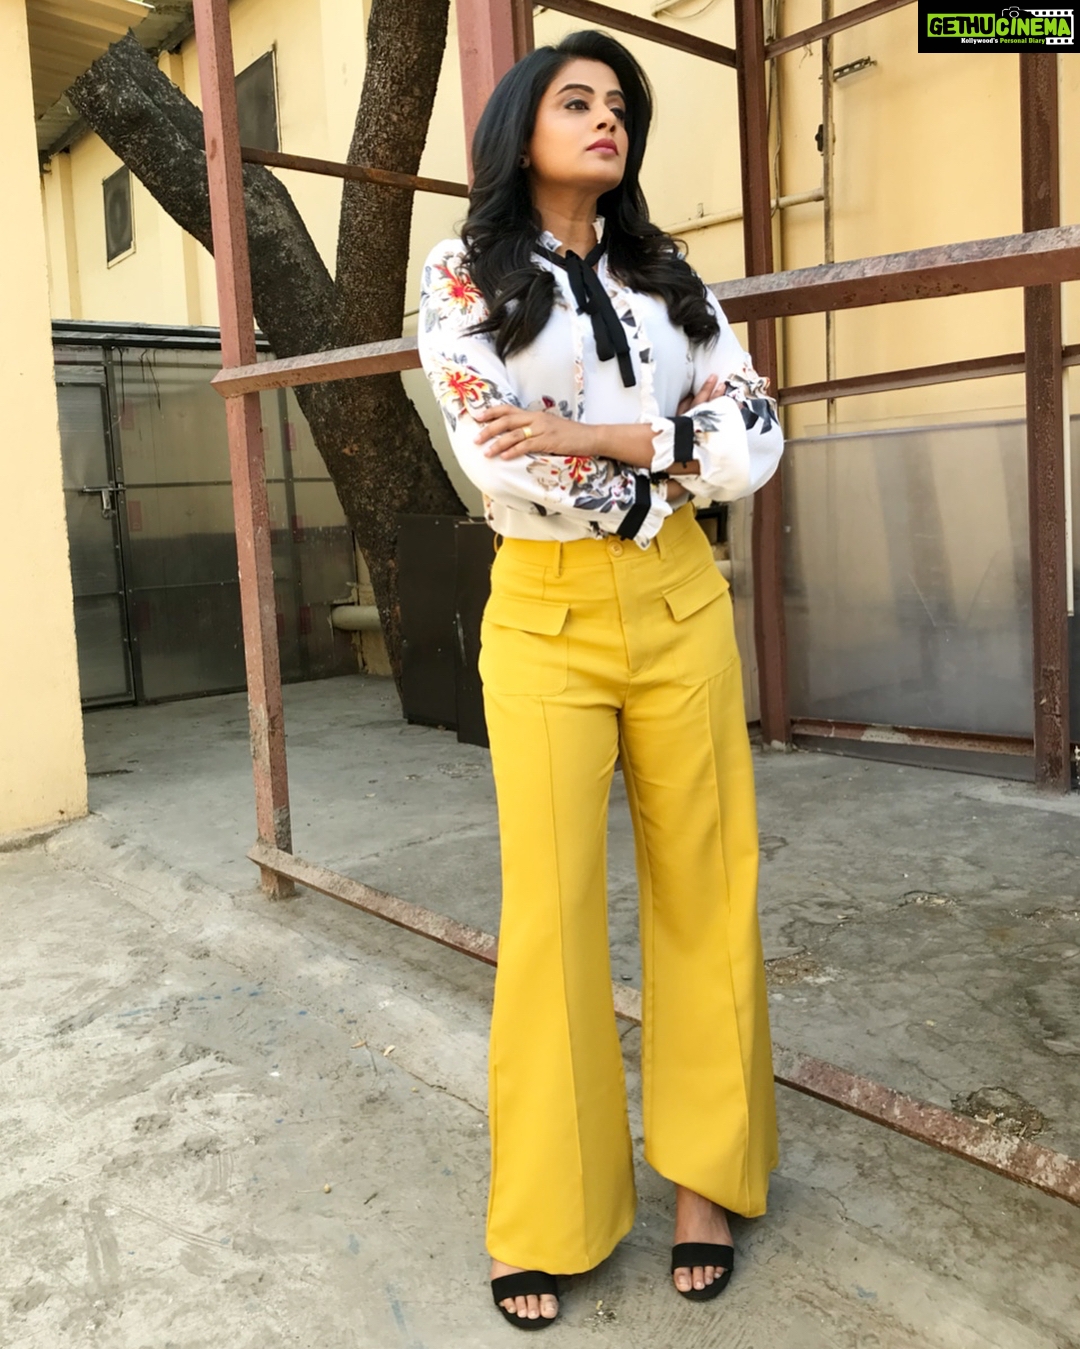 Actress Priyamani Instagram Photos and Posts - July 2018 - Gethu Cinema